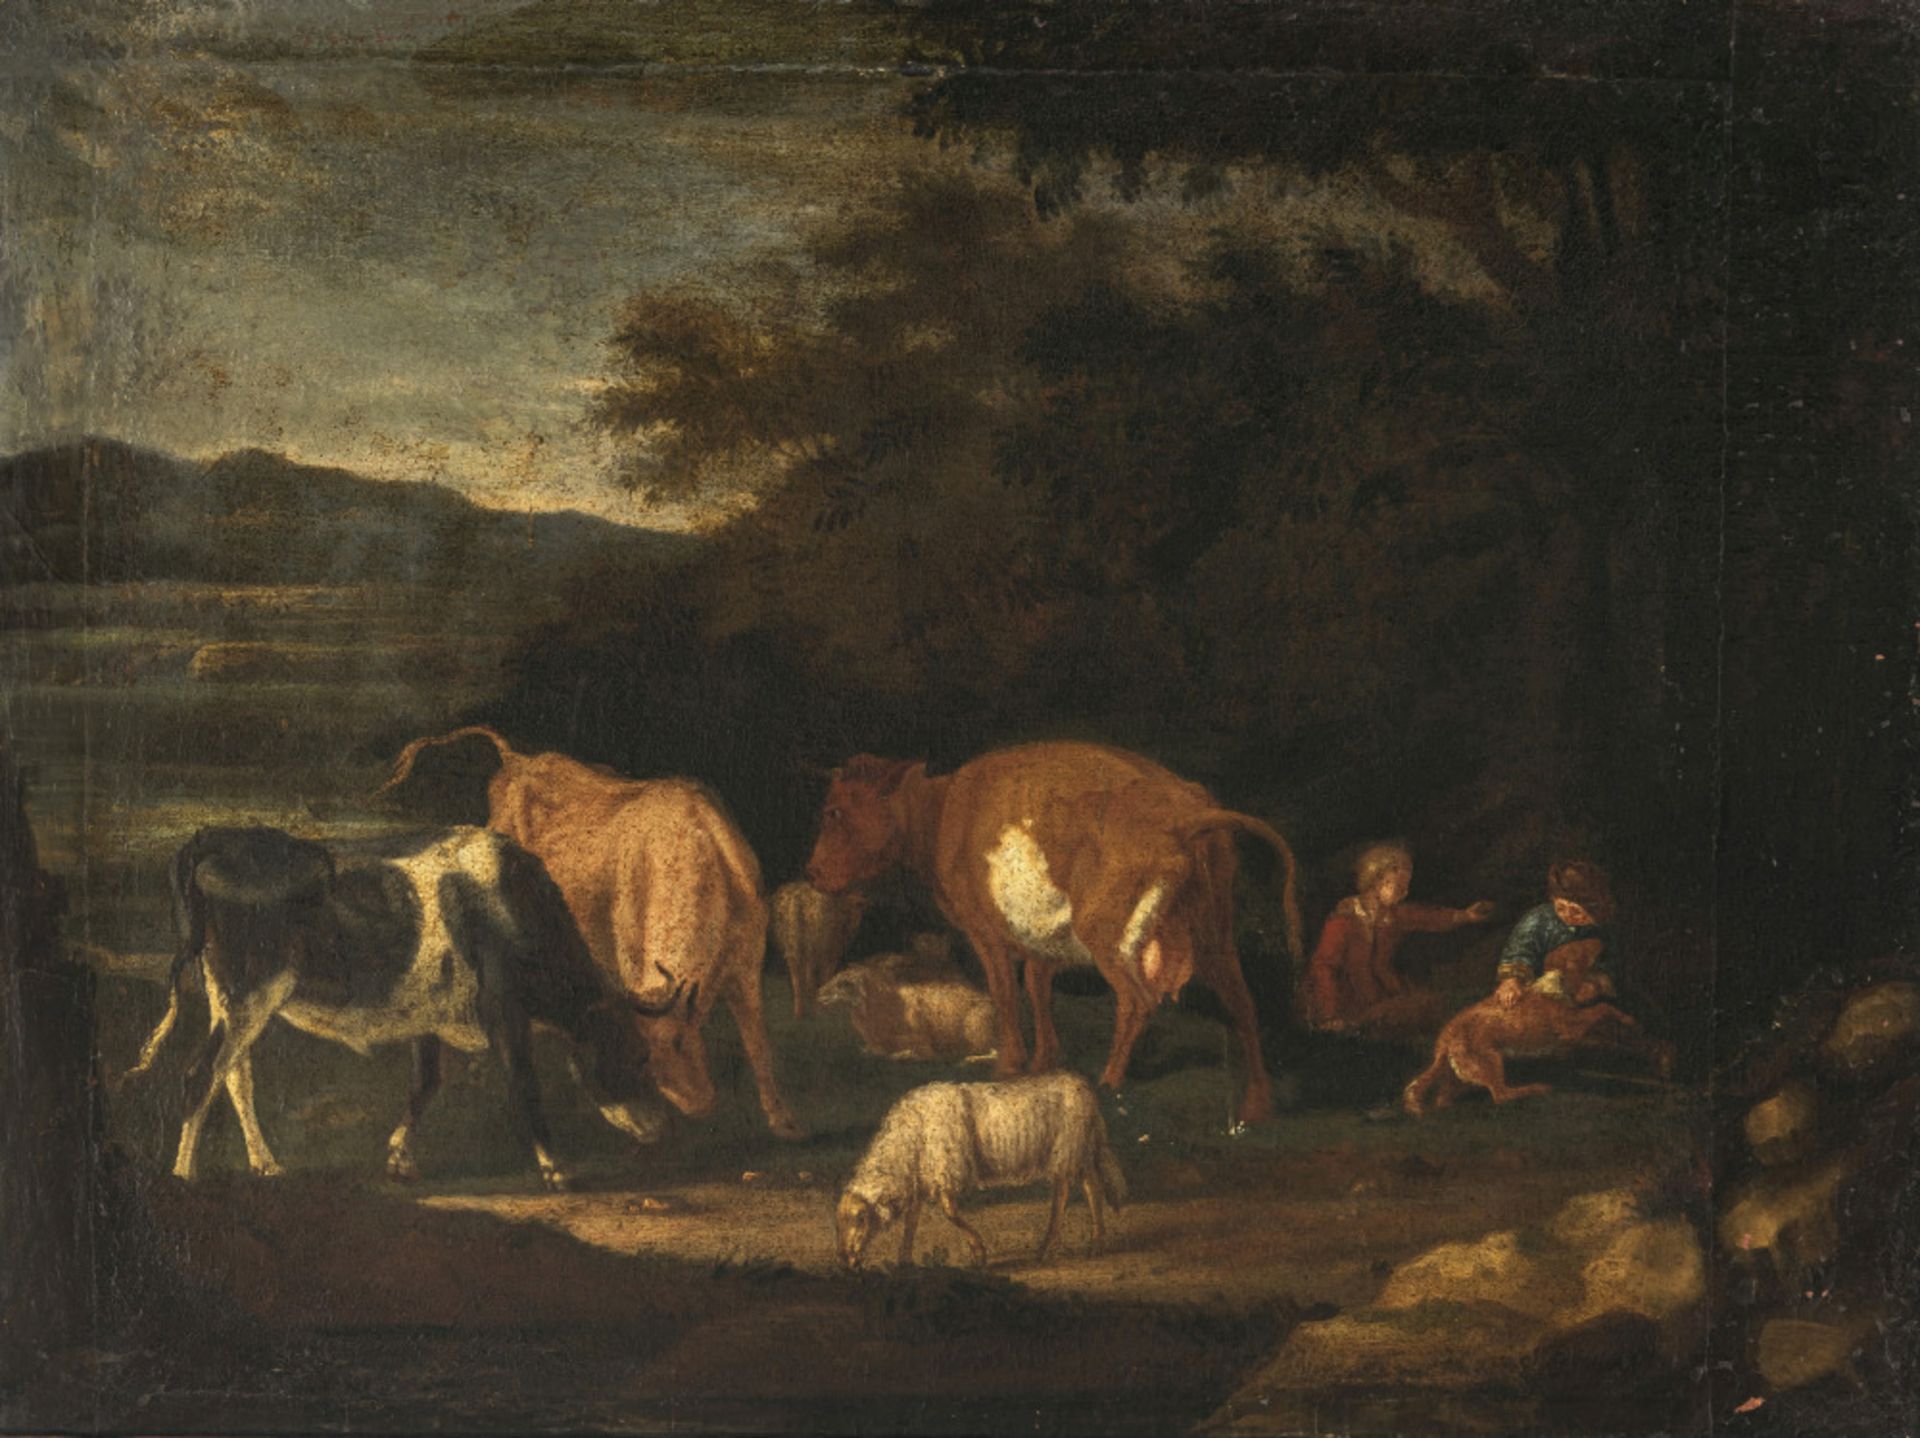 Unbekannt 17th/18th century - Herder children with cows - Image 2 of 2